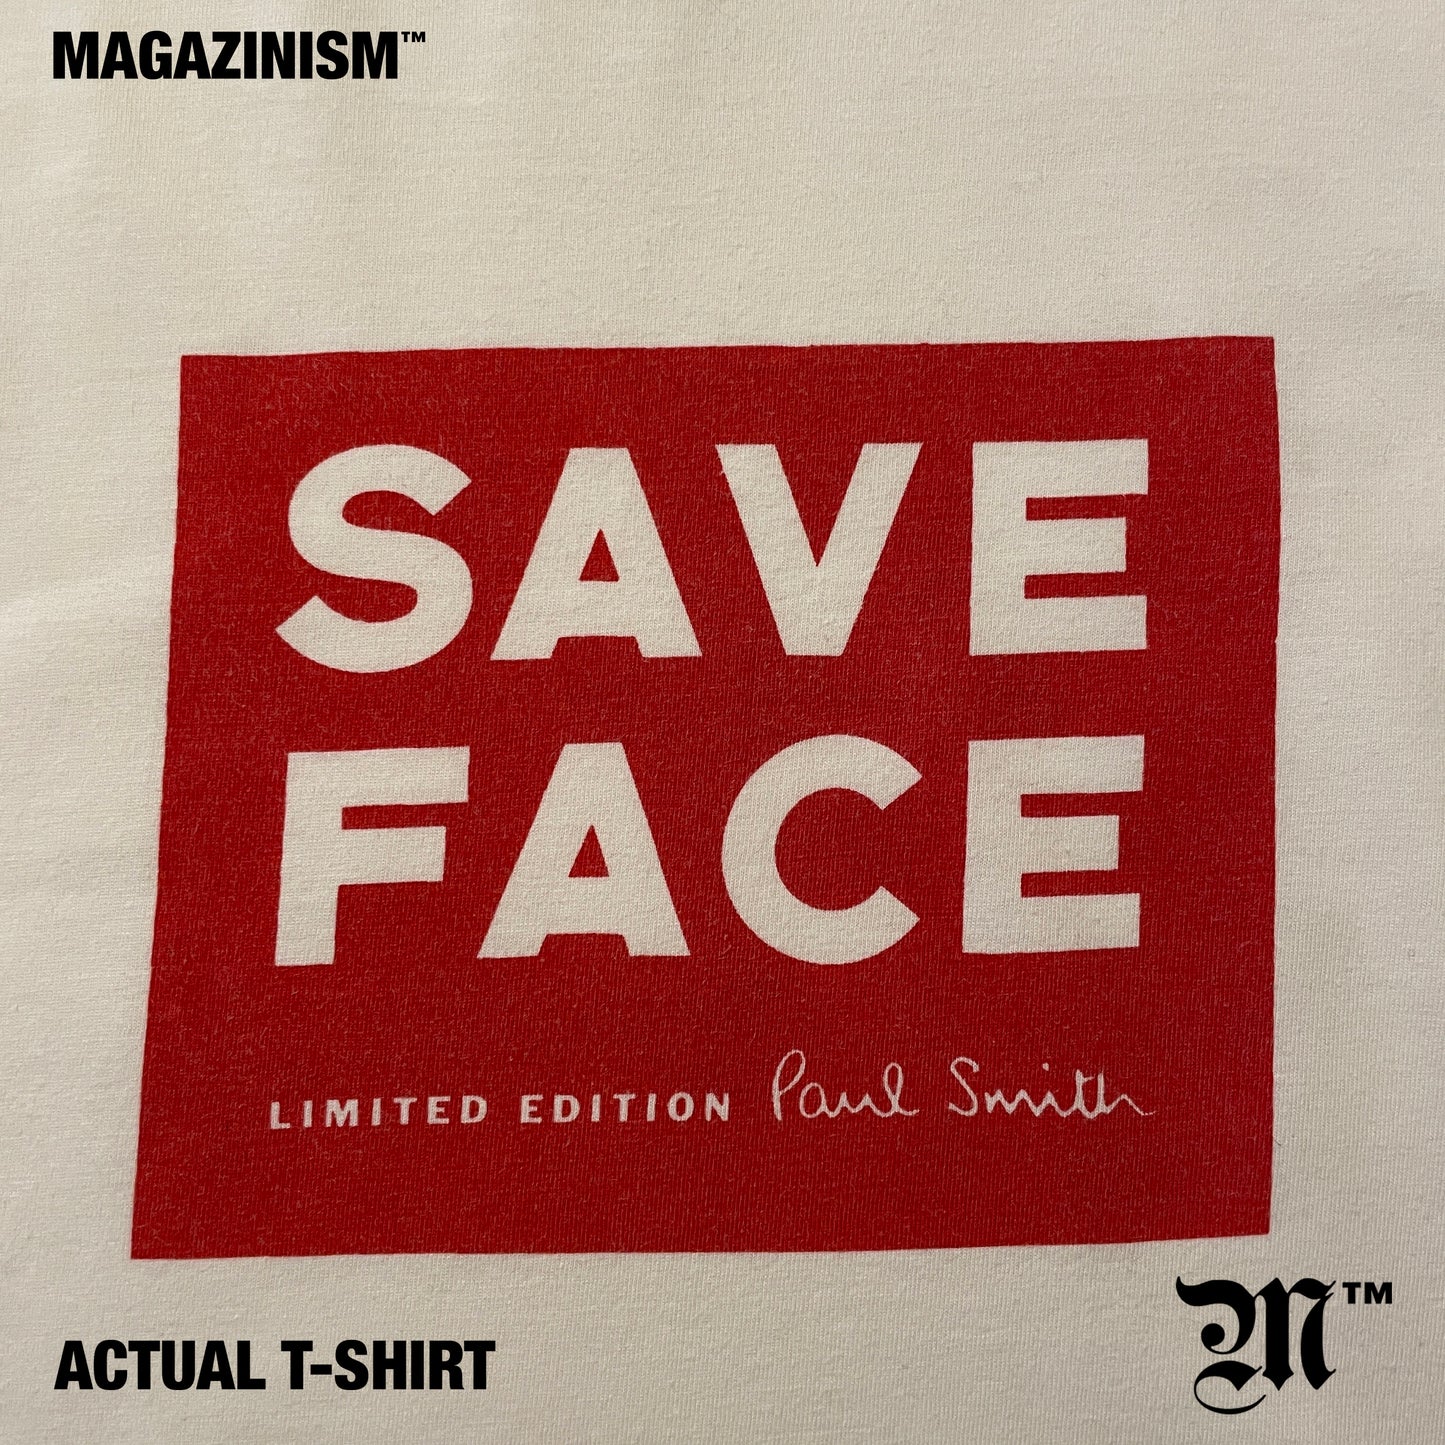 Face Magazine X Paul Smith T-shirt 1992